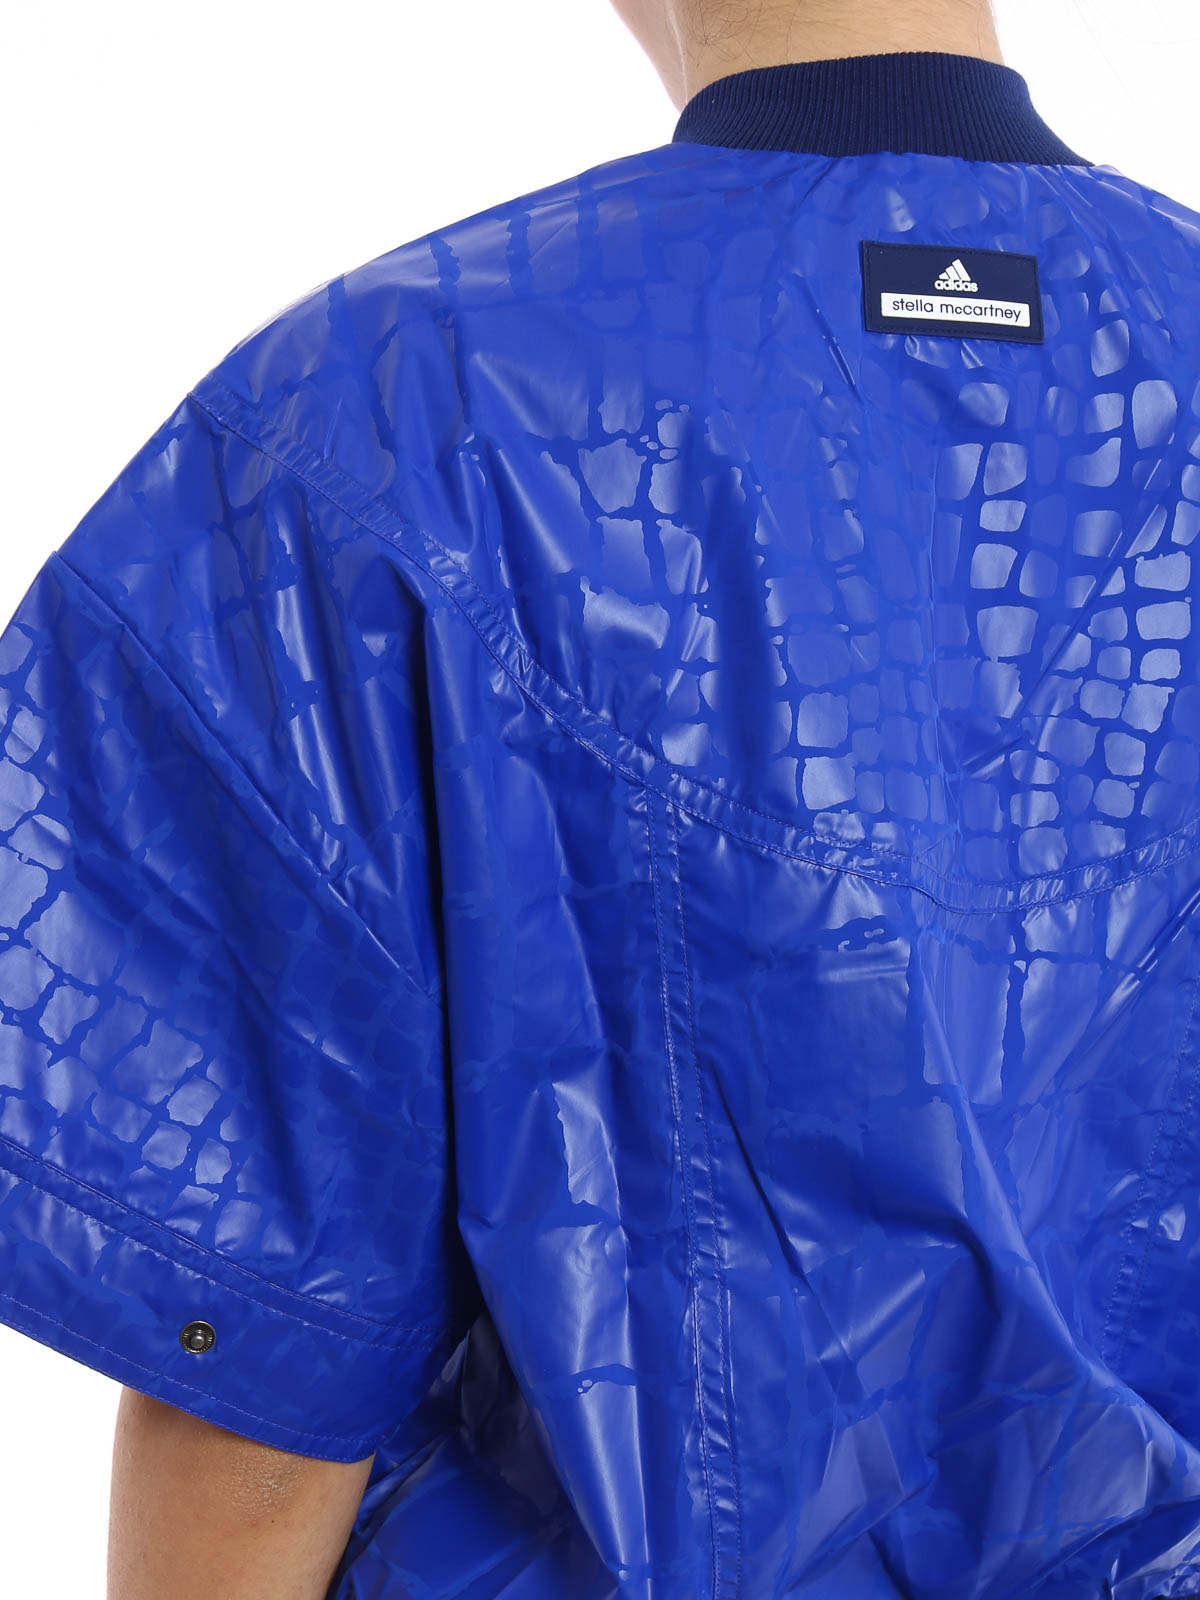 stella mccartney adidas blue jacket